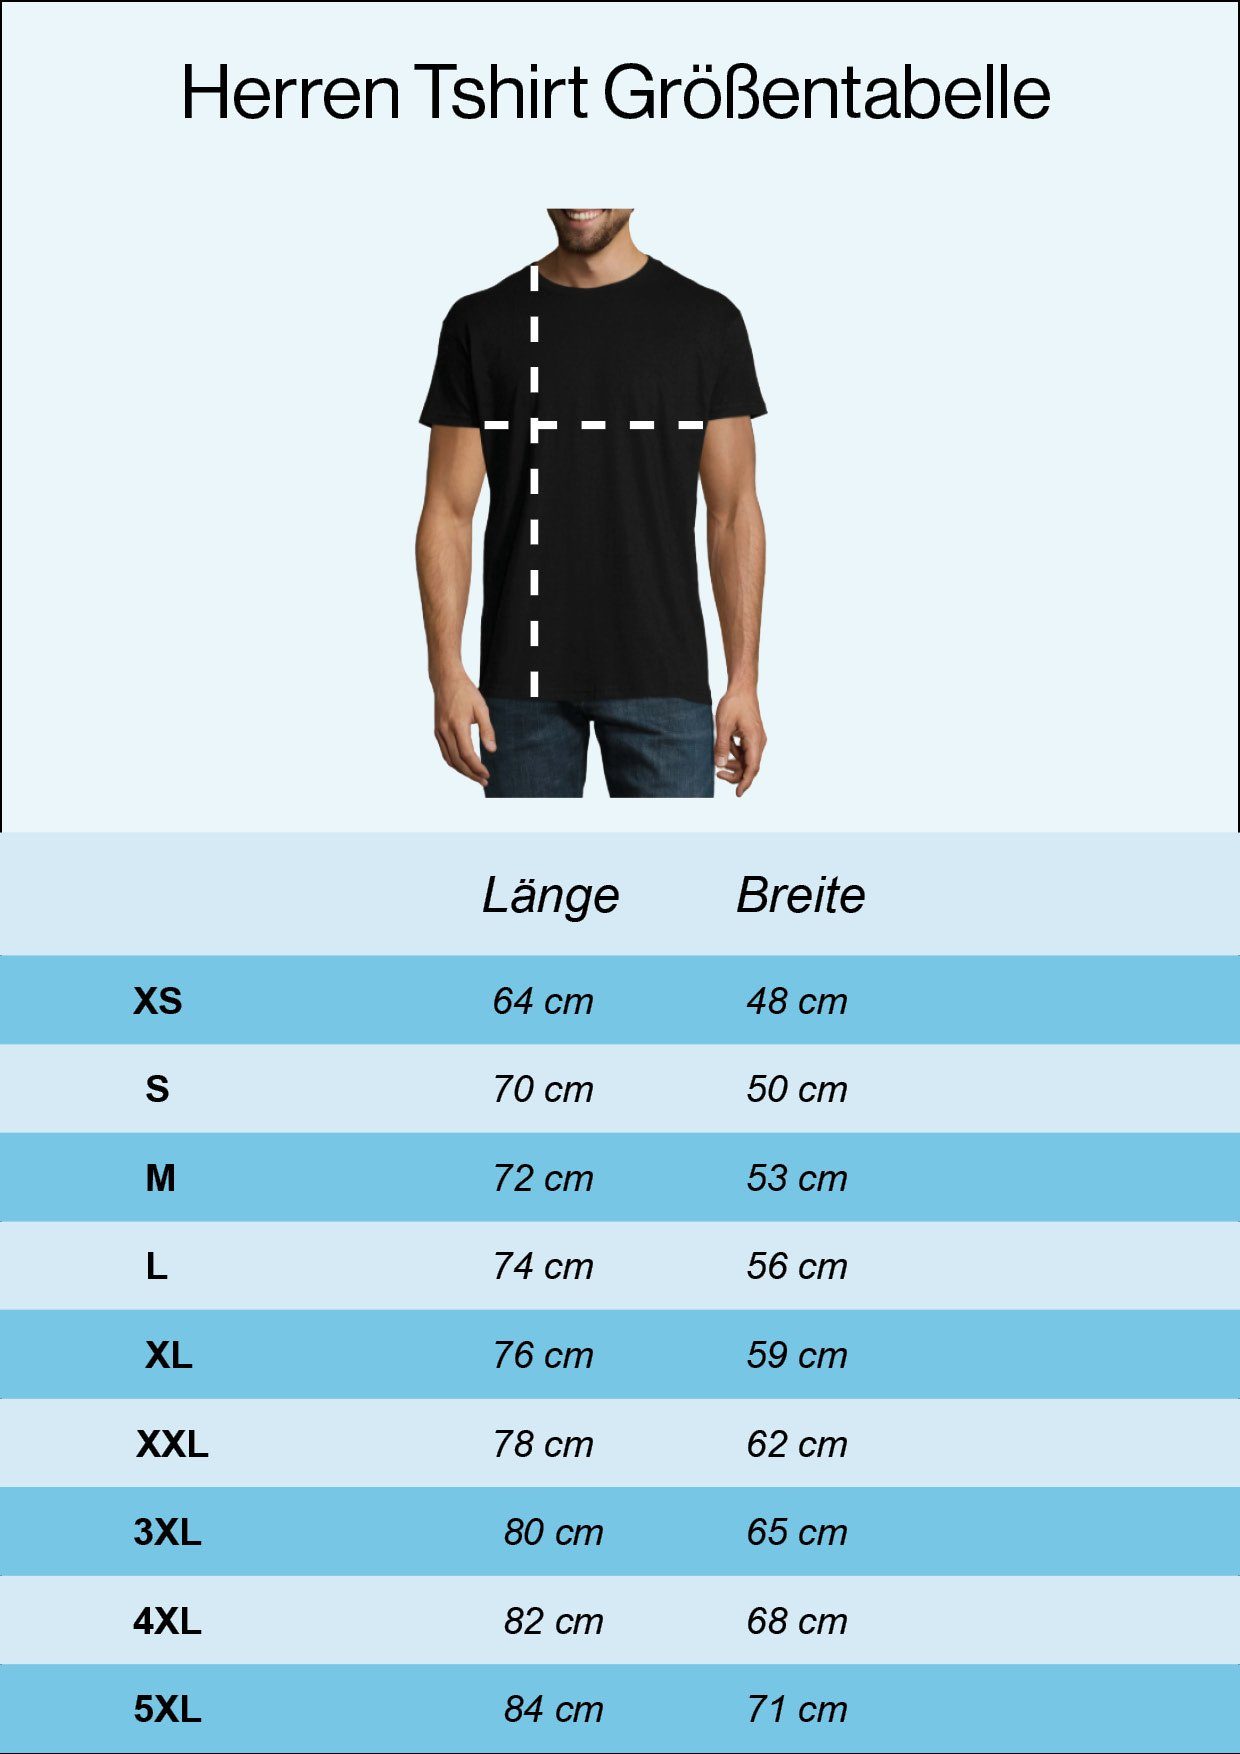 Designz Shirt Youth Frontprint Traktor Herren trendigem T-Shirt Navyblau mit Heartbeat